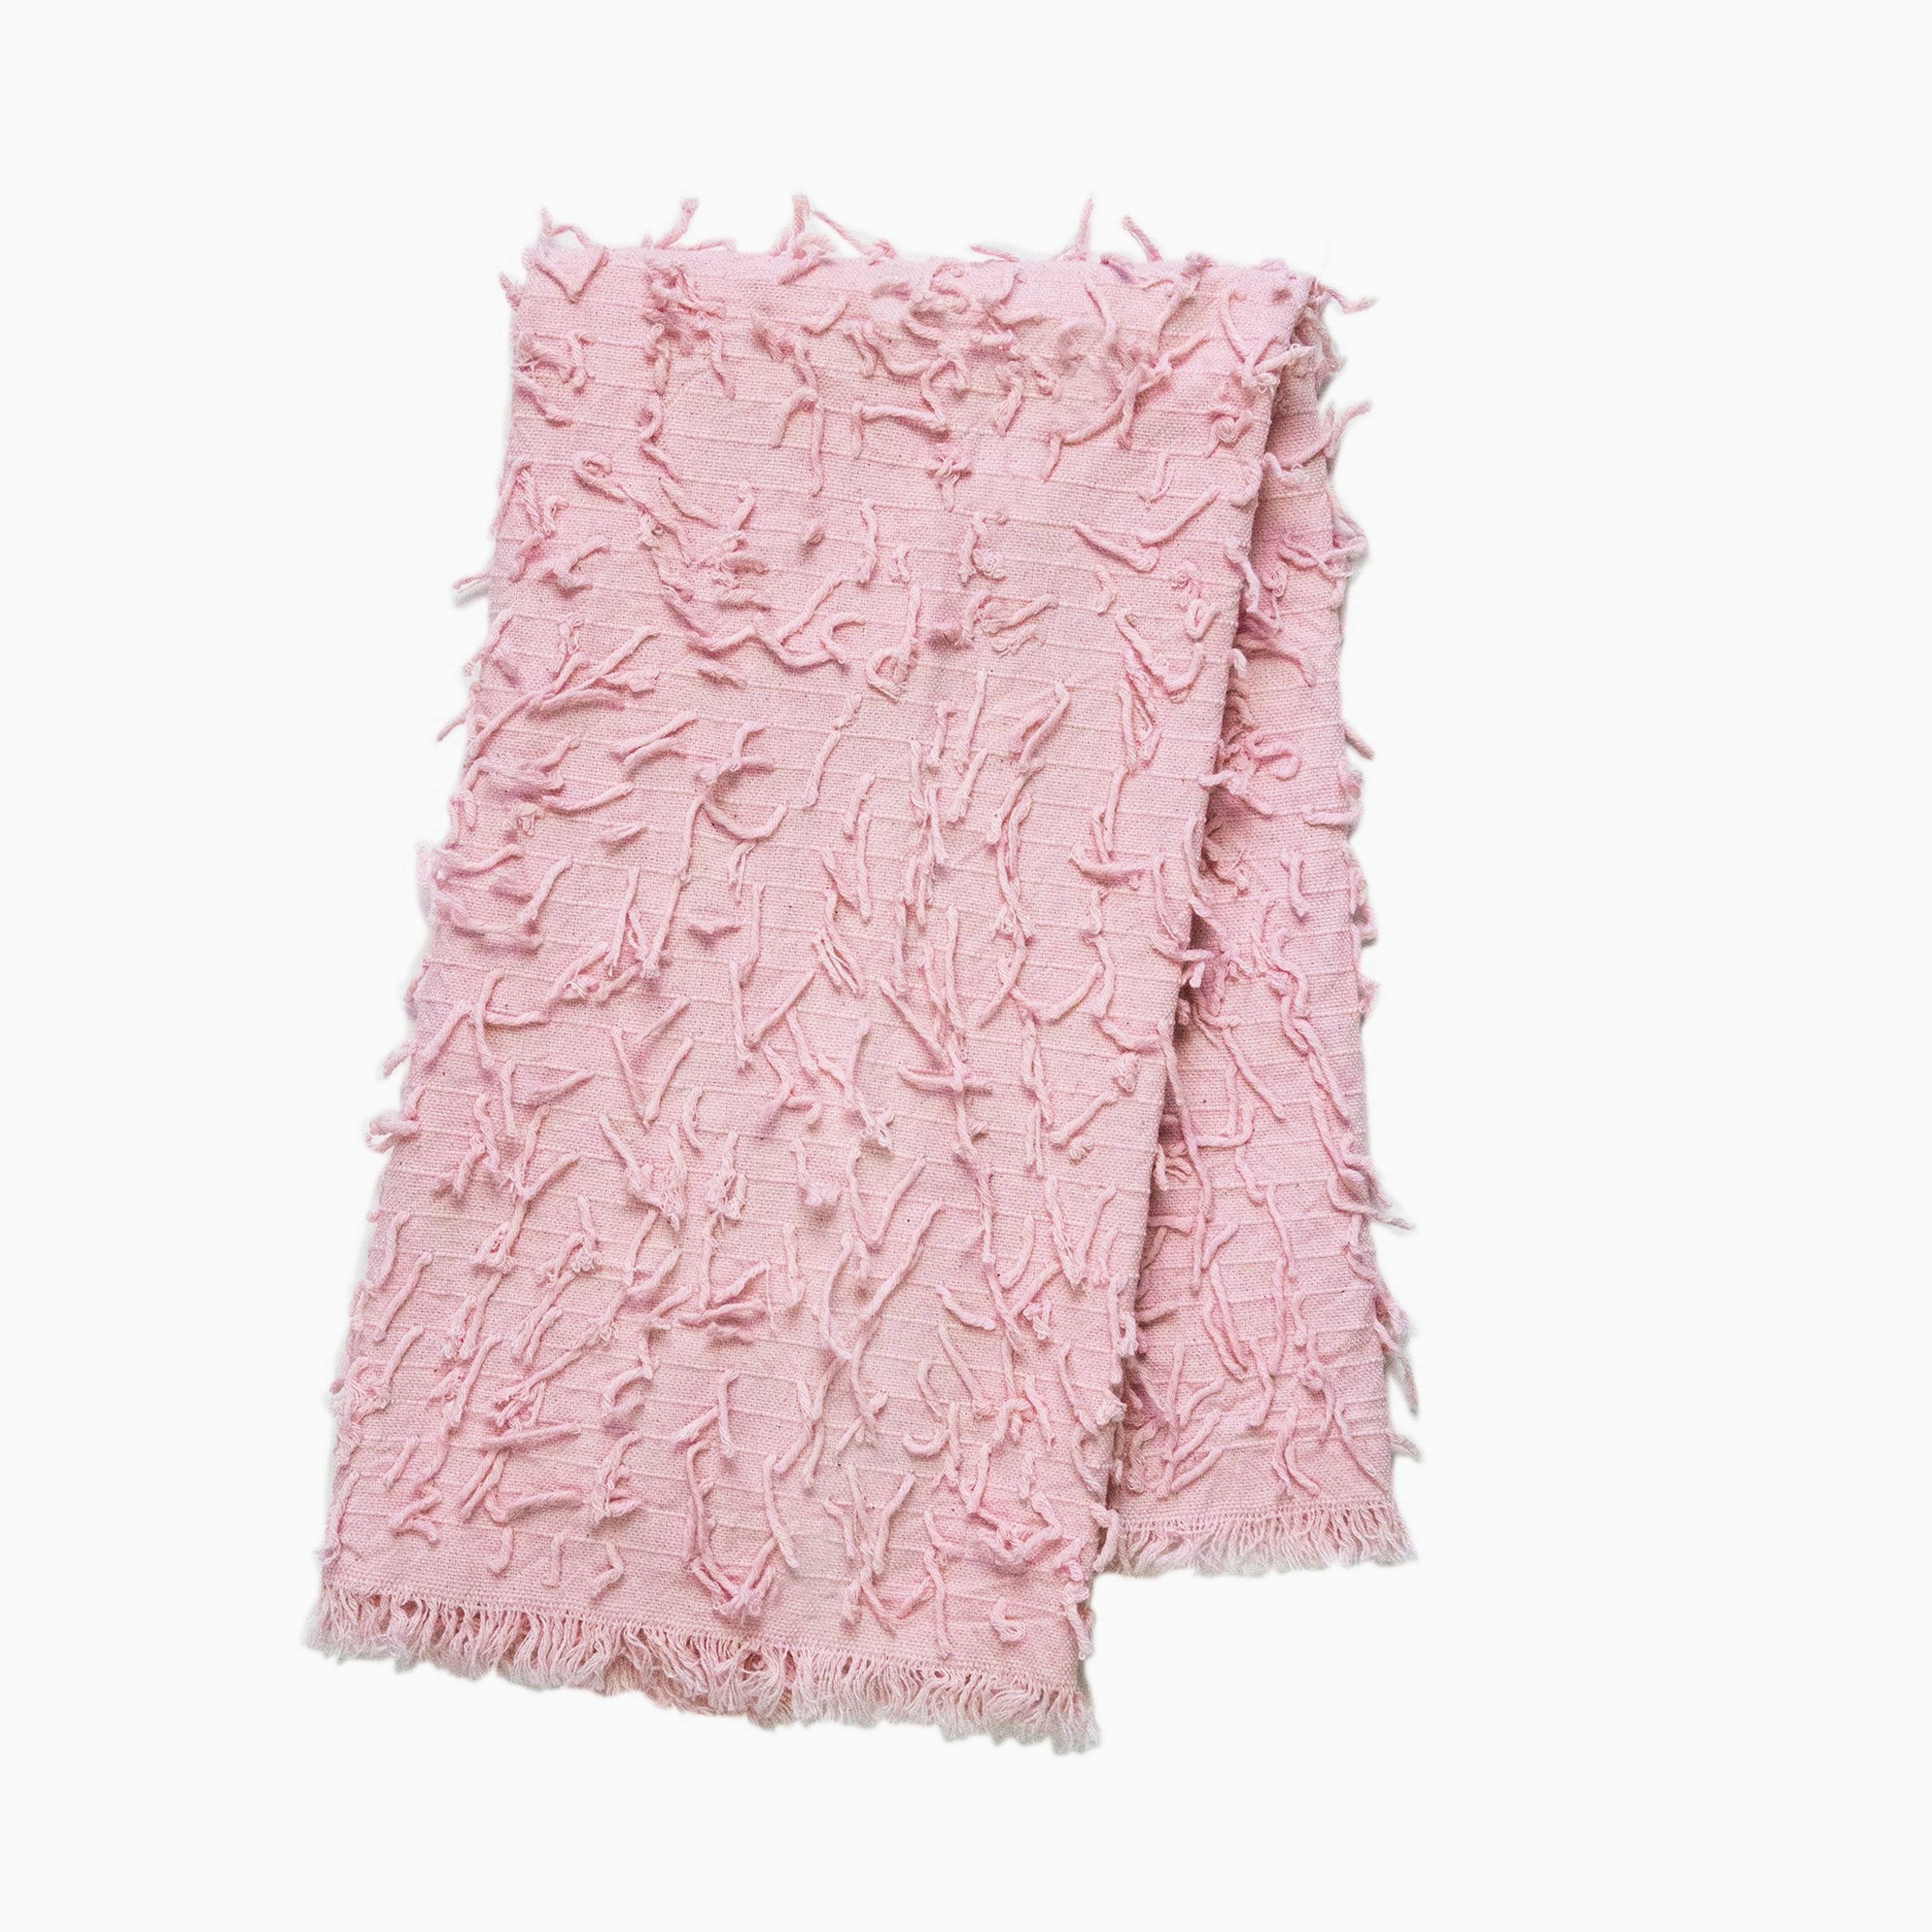 Tortilla Towel in Light Pink